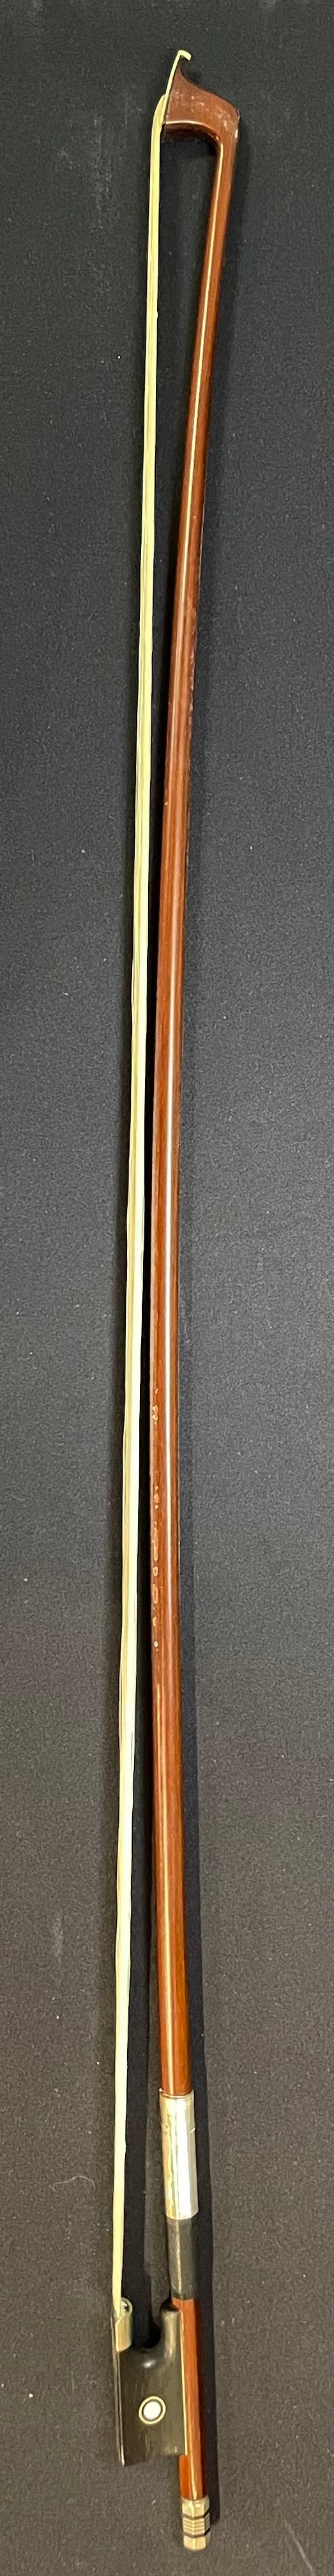 4/4 Violin Bow - H. R. Schicker Original Wood Model